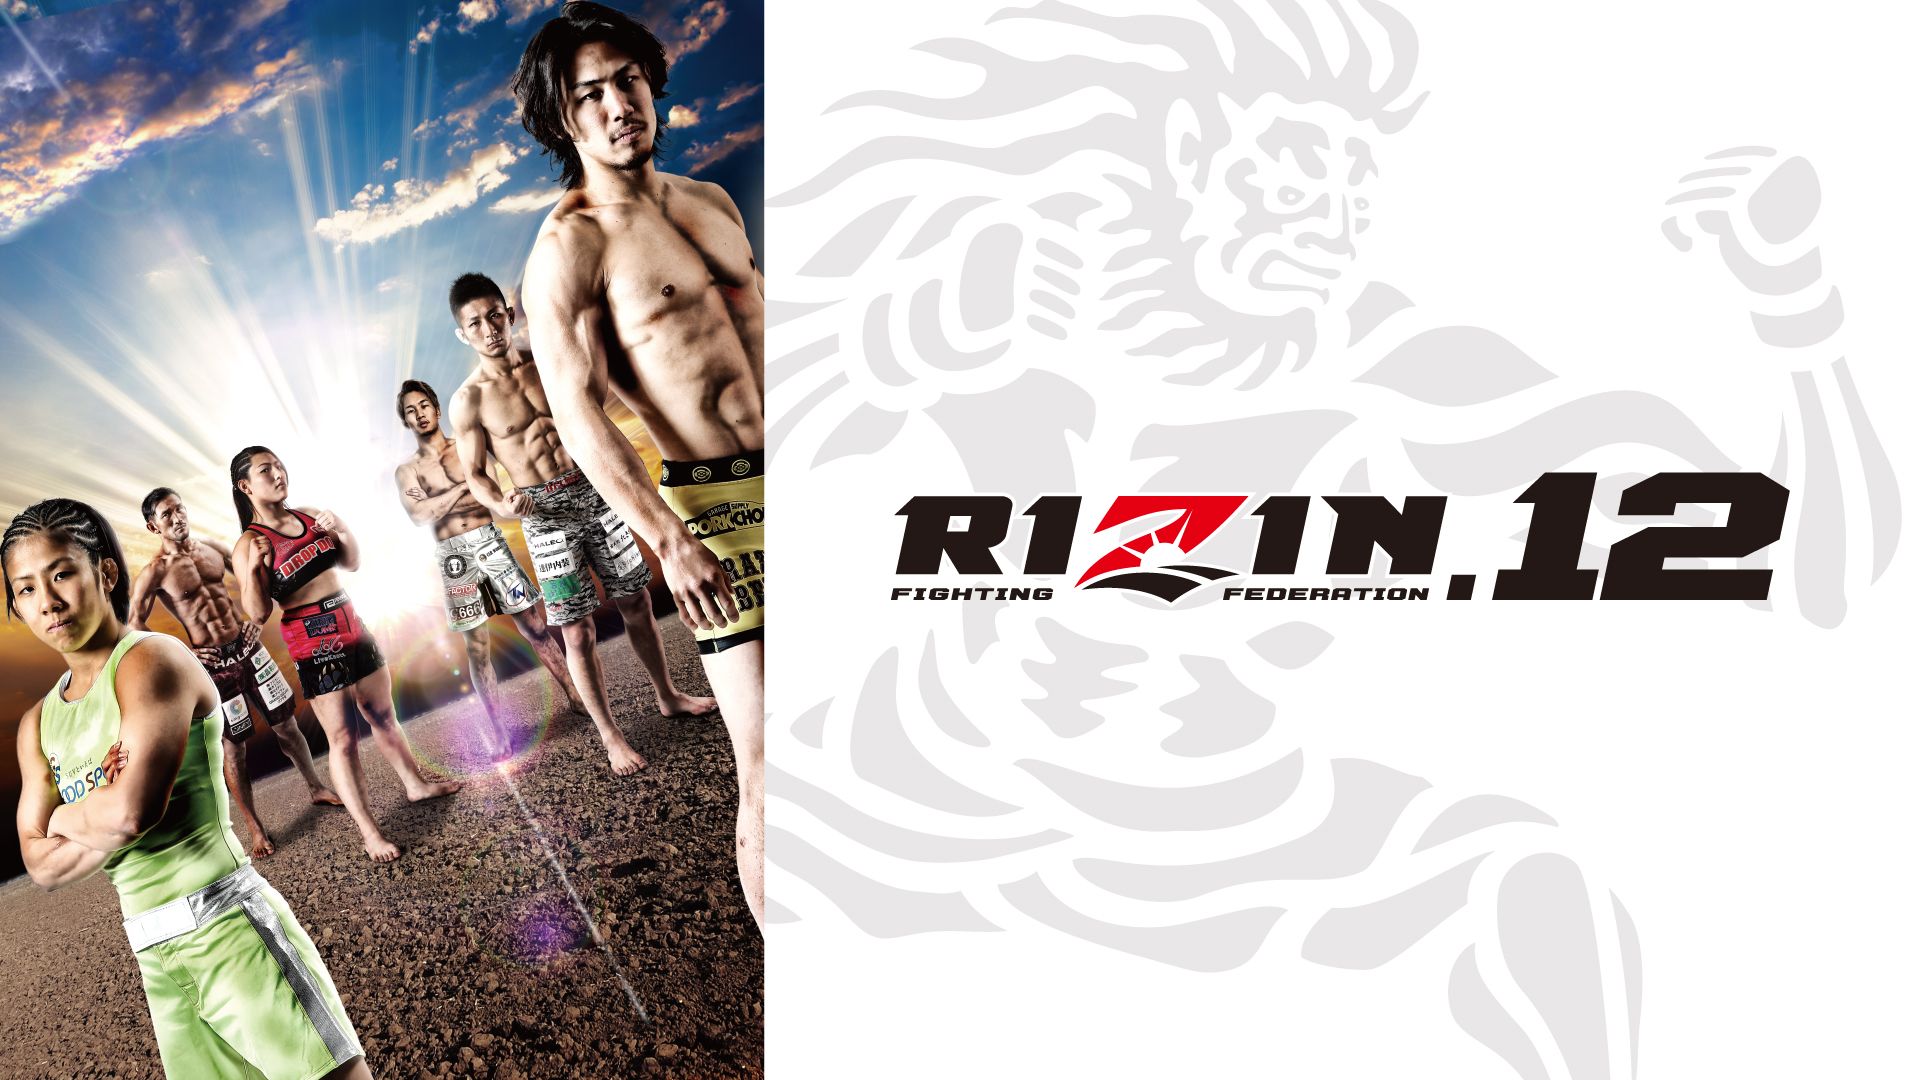 RWEDDINGS presents RIZIN.12